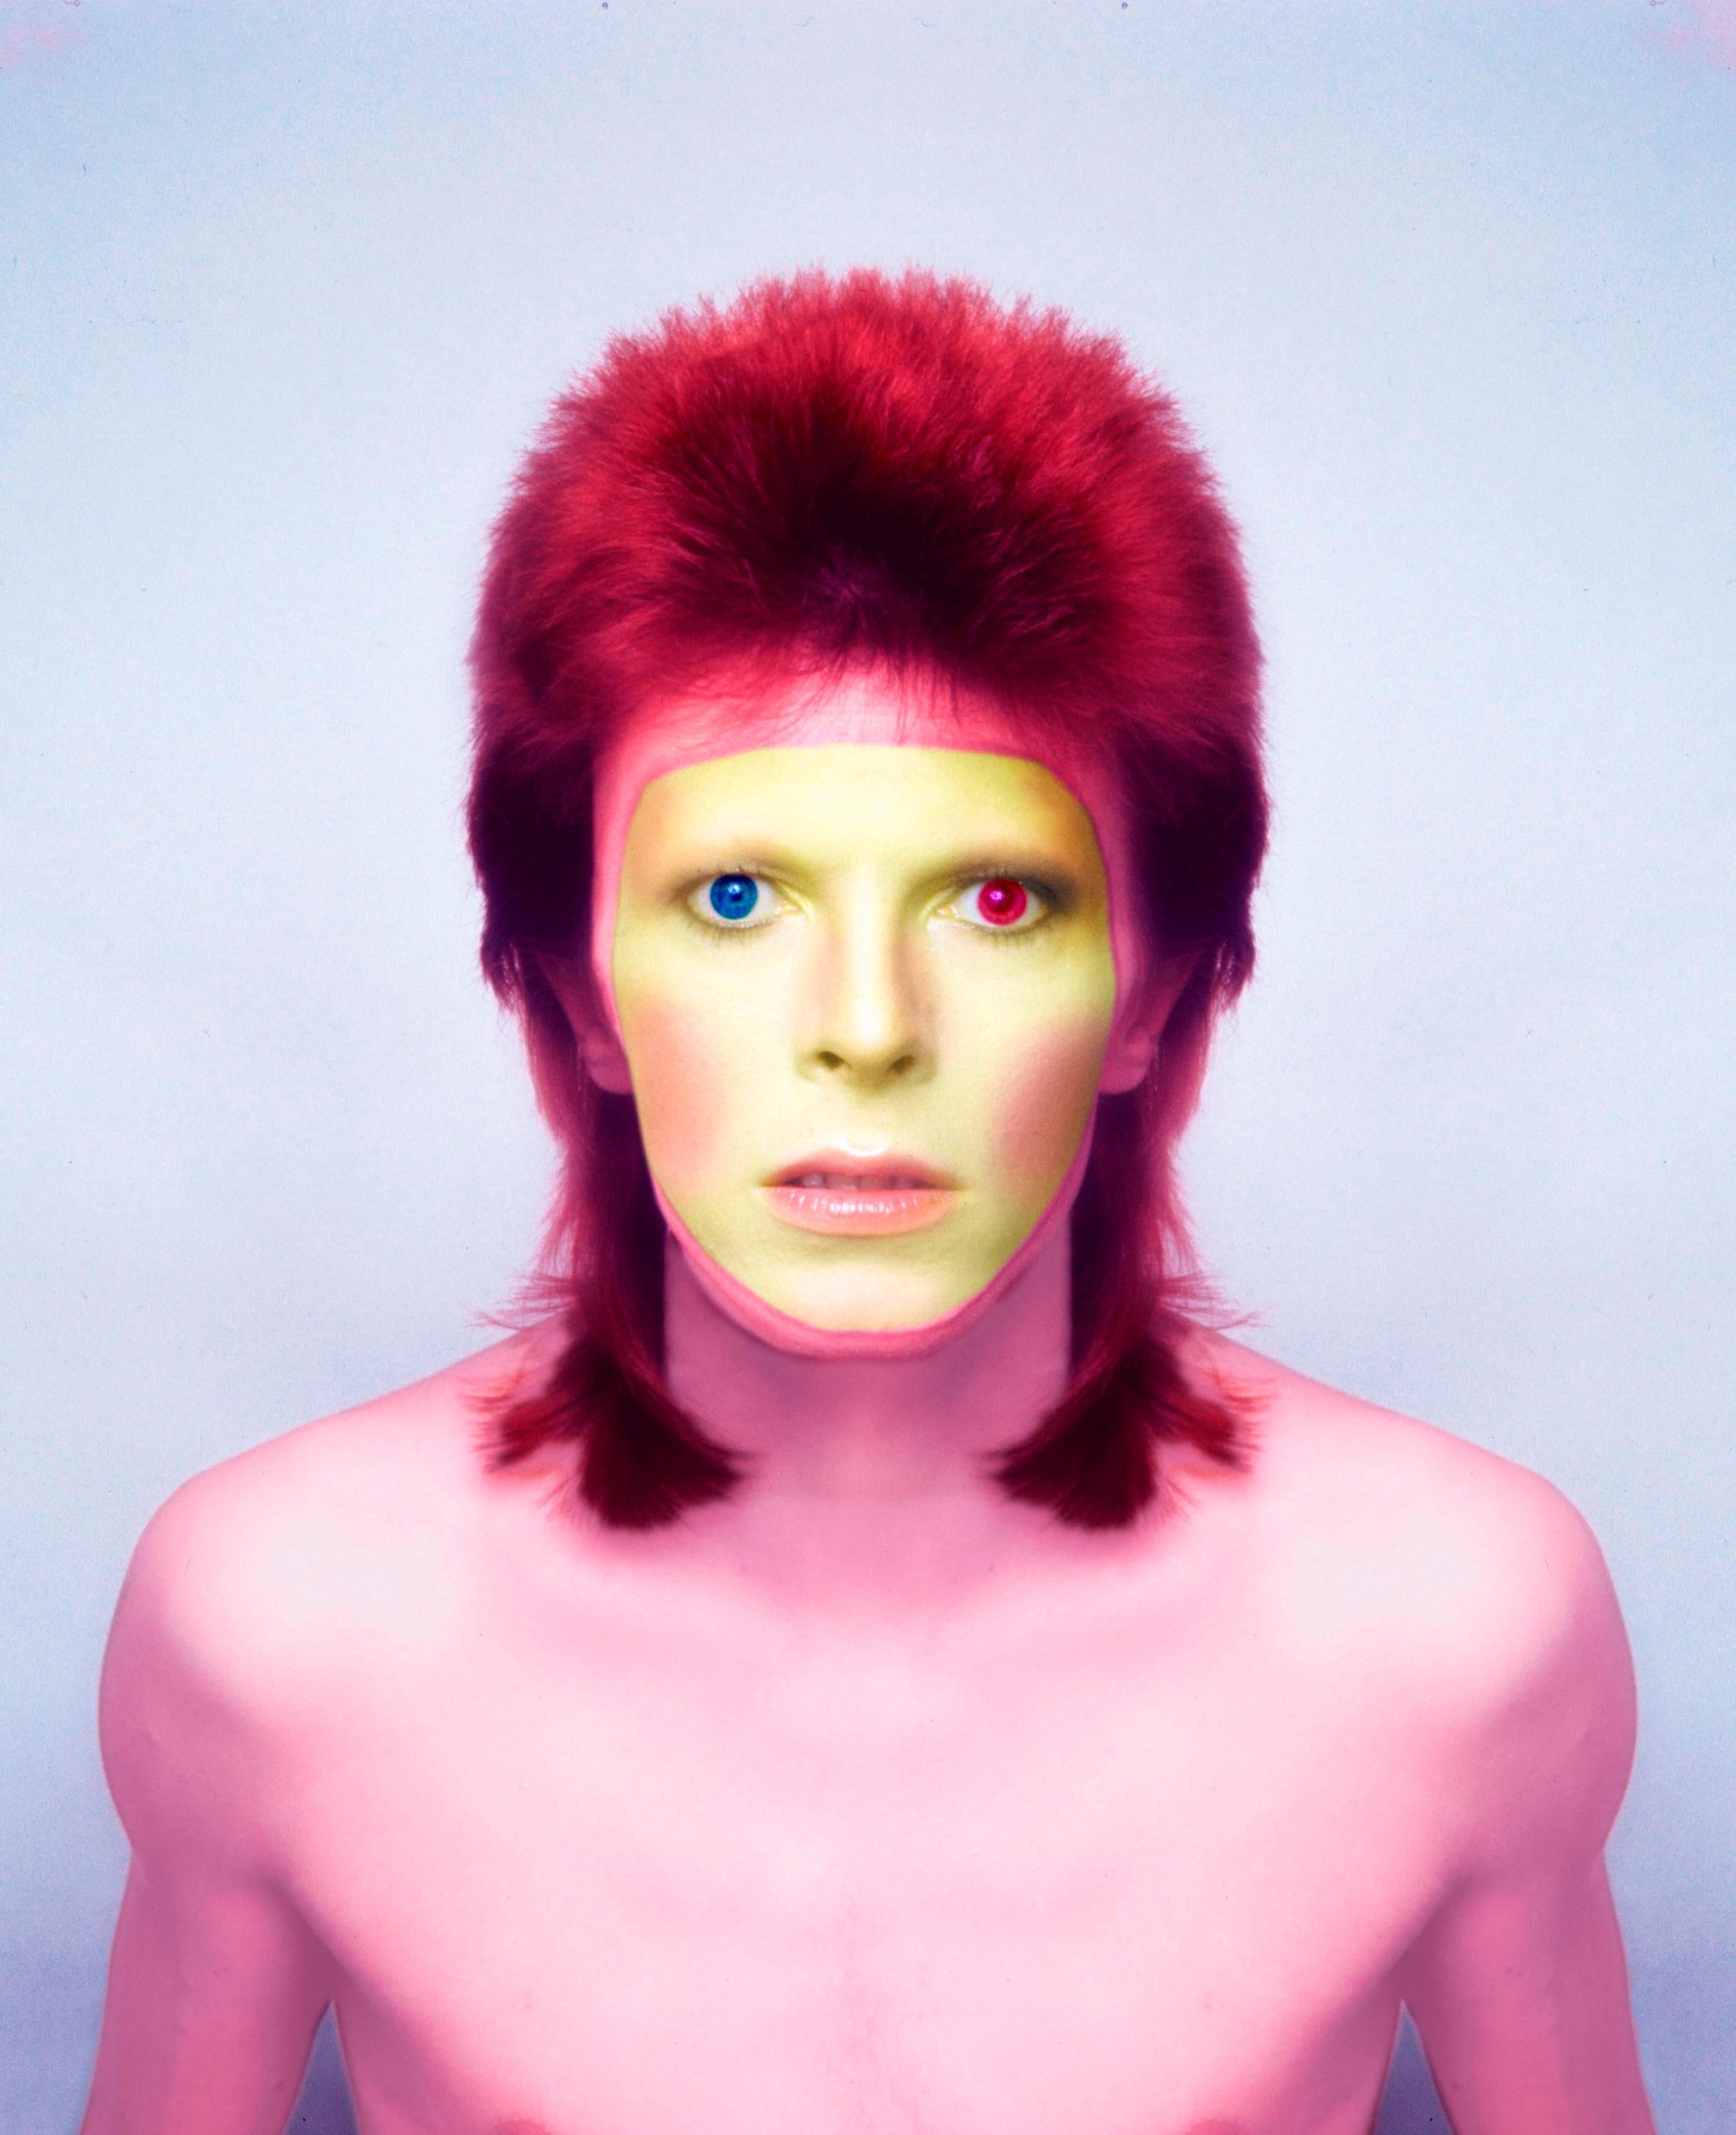 Color Photograph Justin de Villaneuve - « Pin Ups » de David Bowie